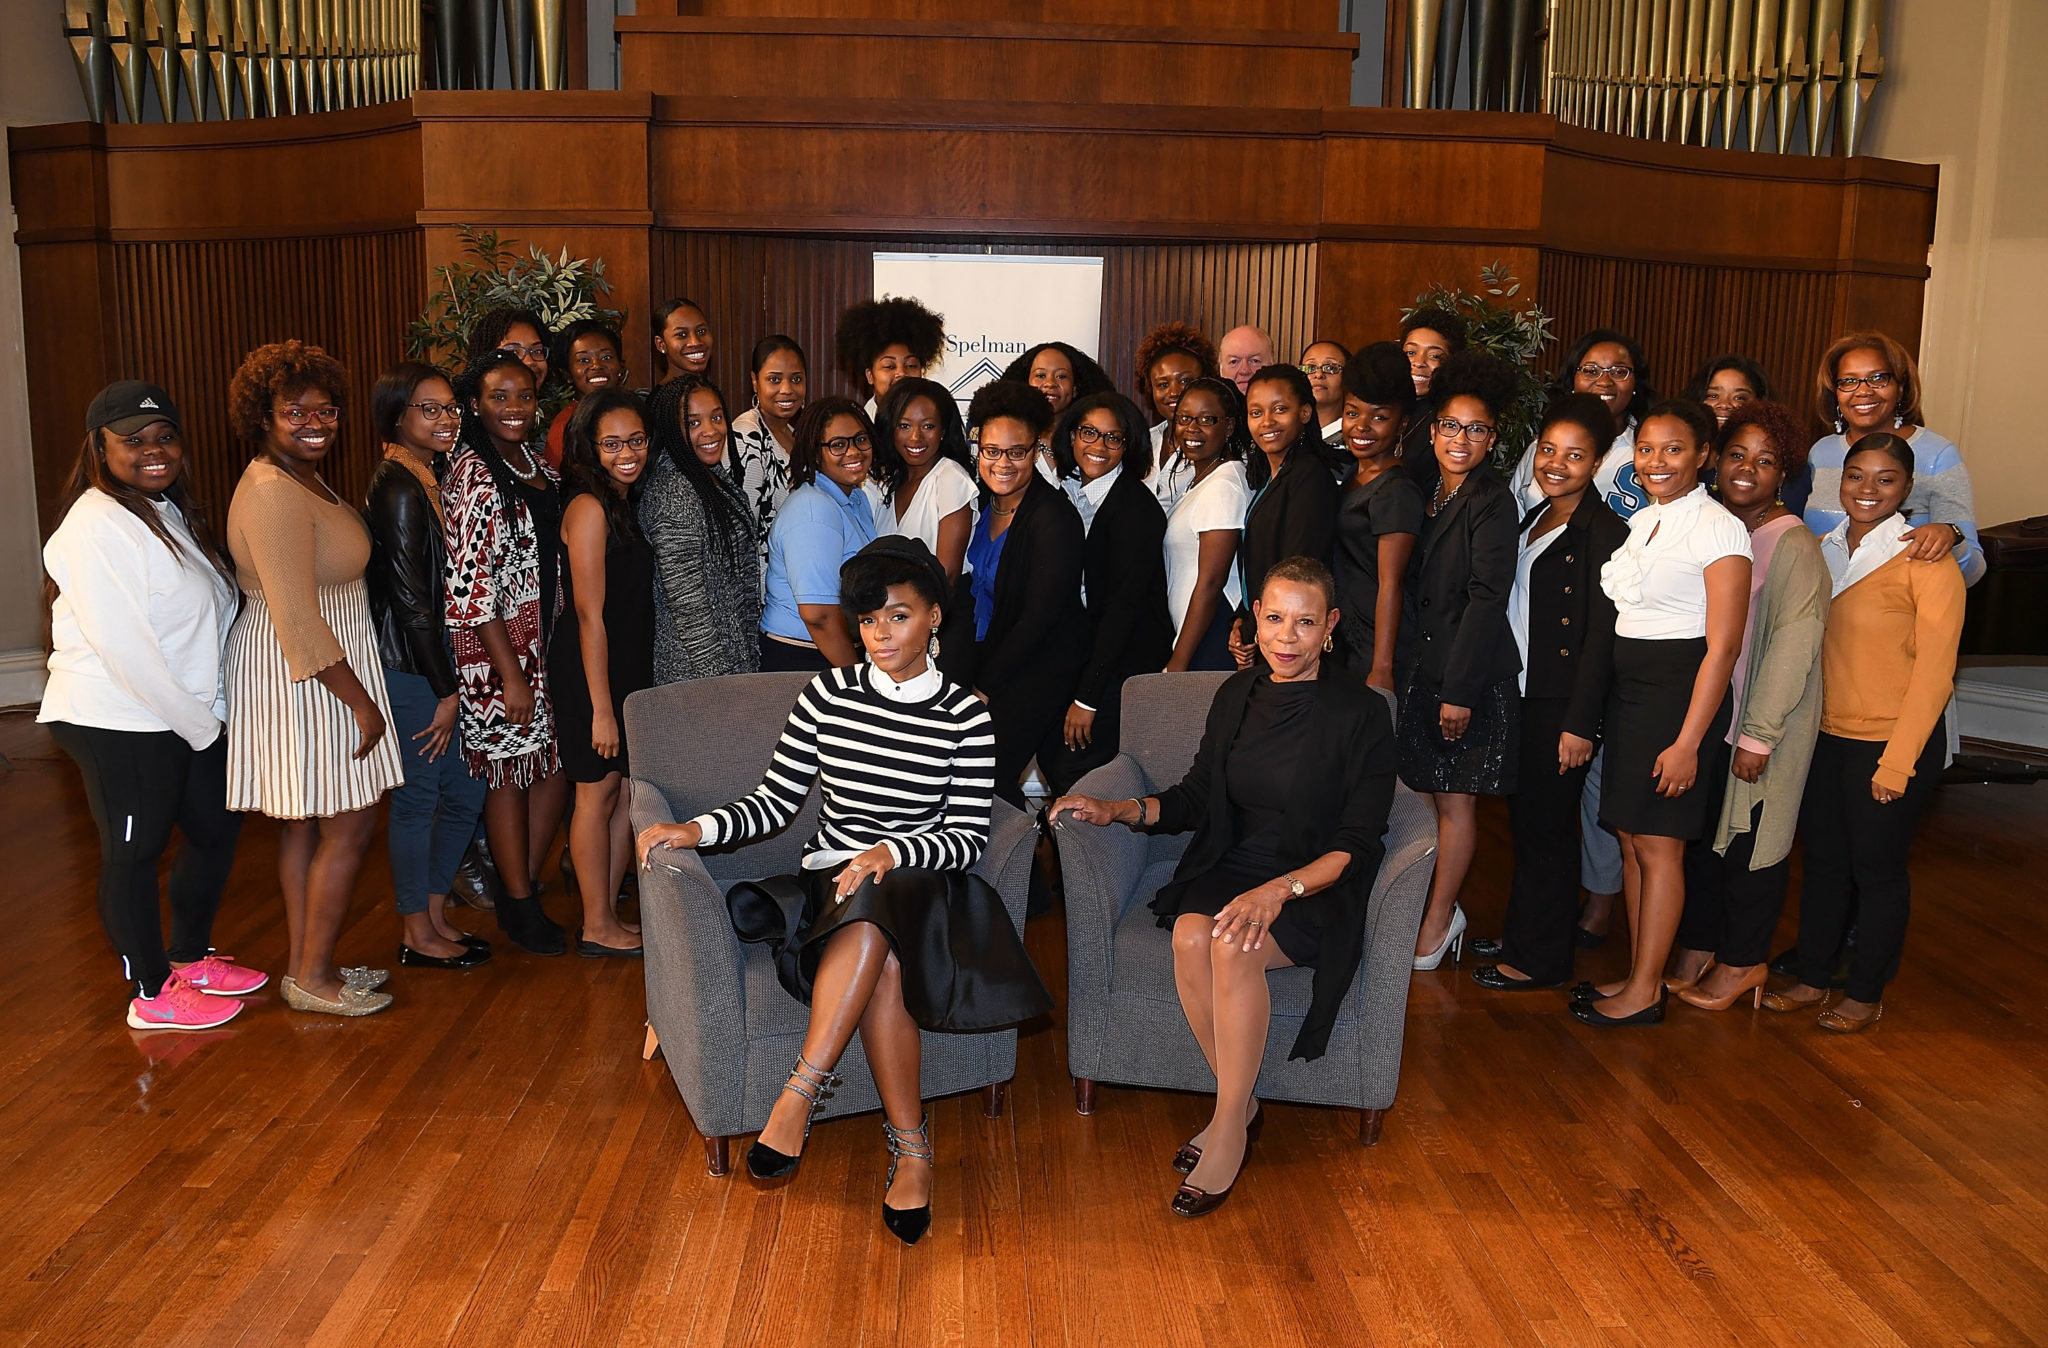 Janelle Monae Talks "HIDDEN FIGURES" with Atlanta HBCU Students at Spelman Convocation